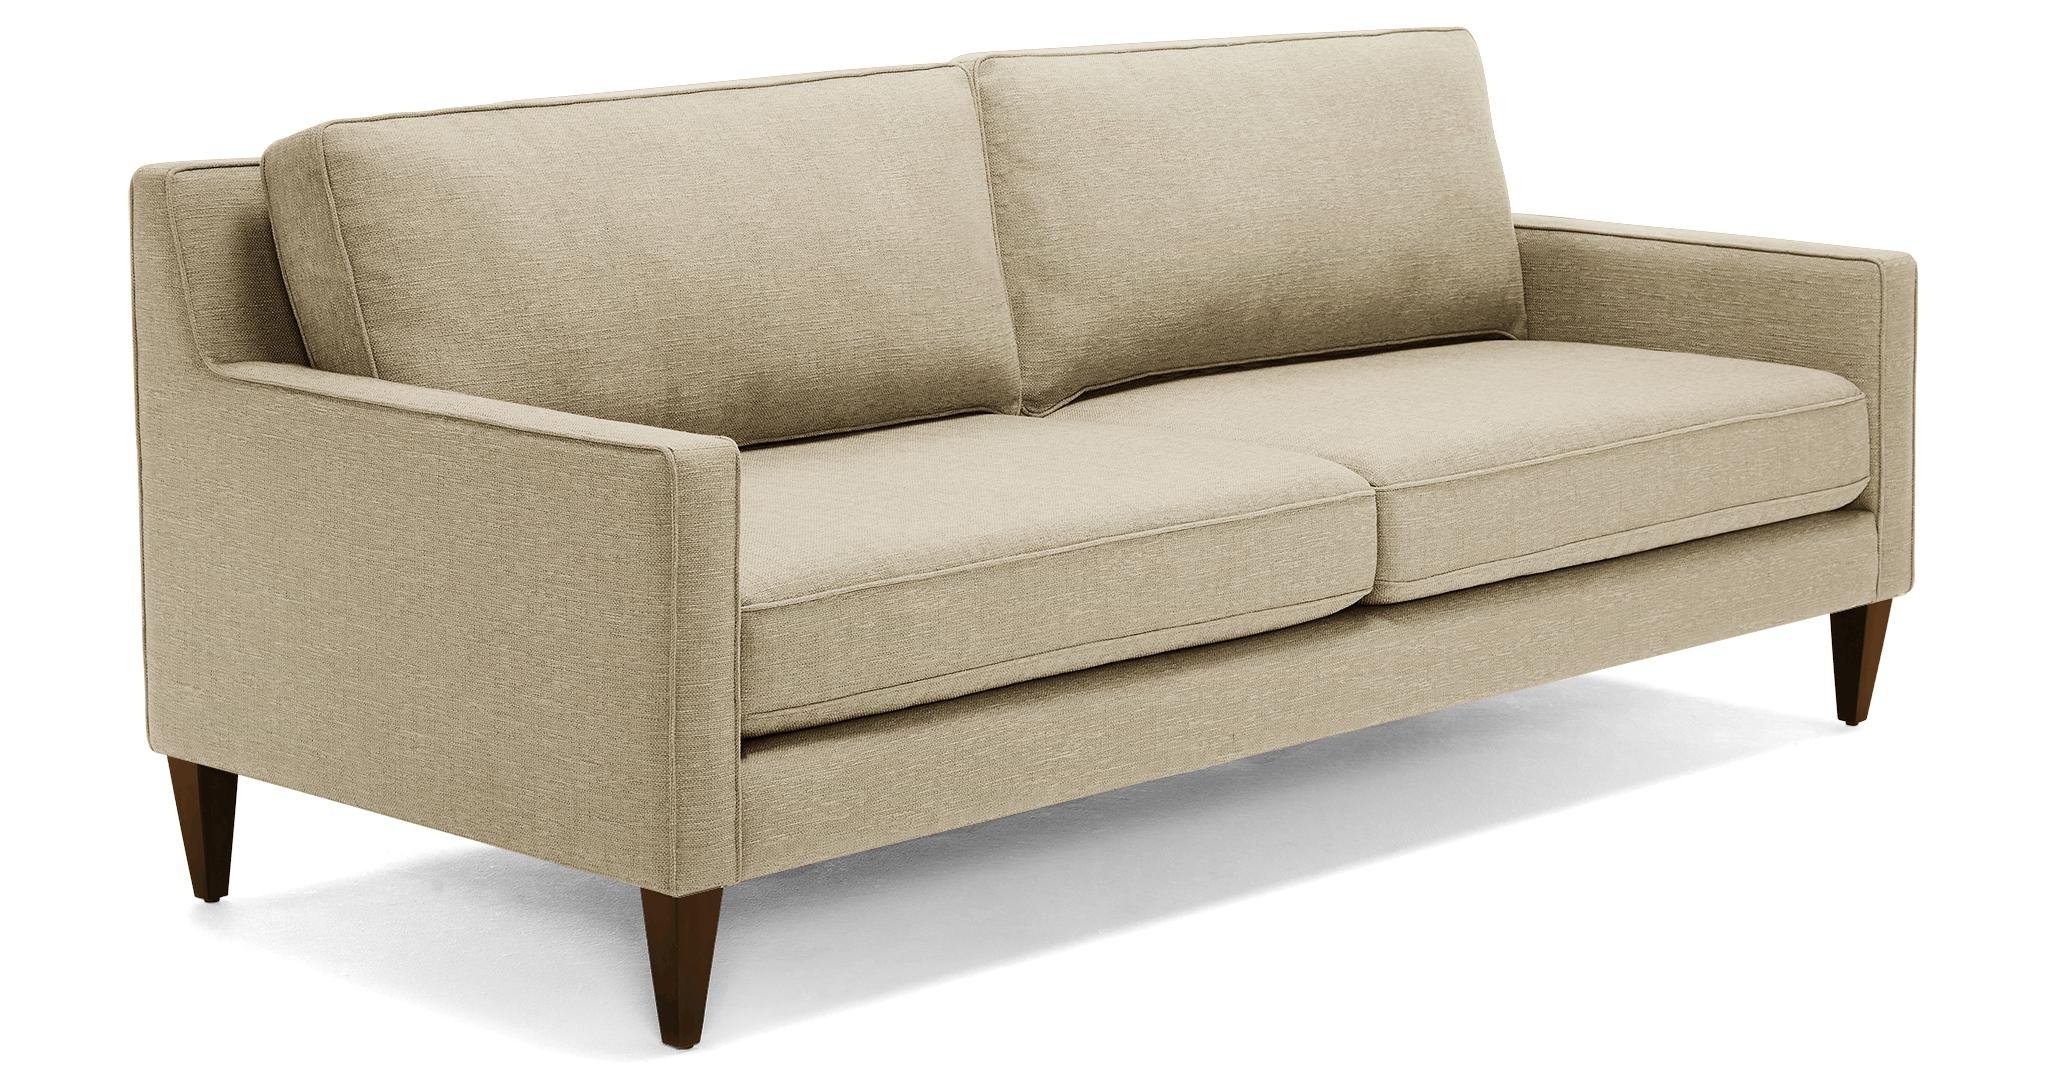 Gray Levi Mid Century Modern Sofa - Bloke Cotton - Mocha - Image 1